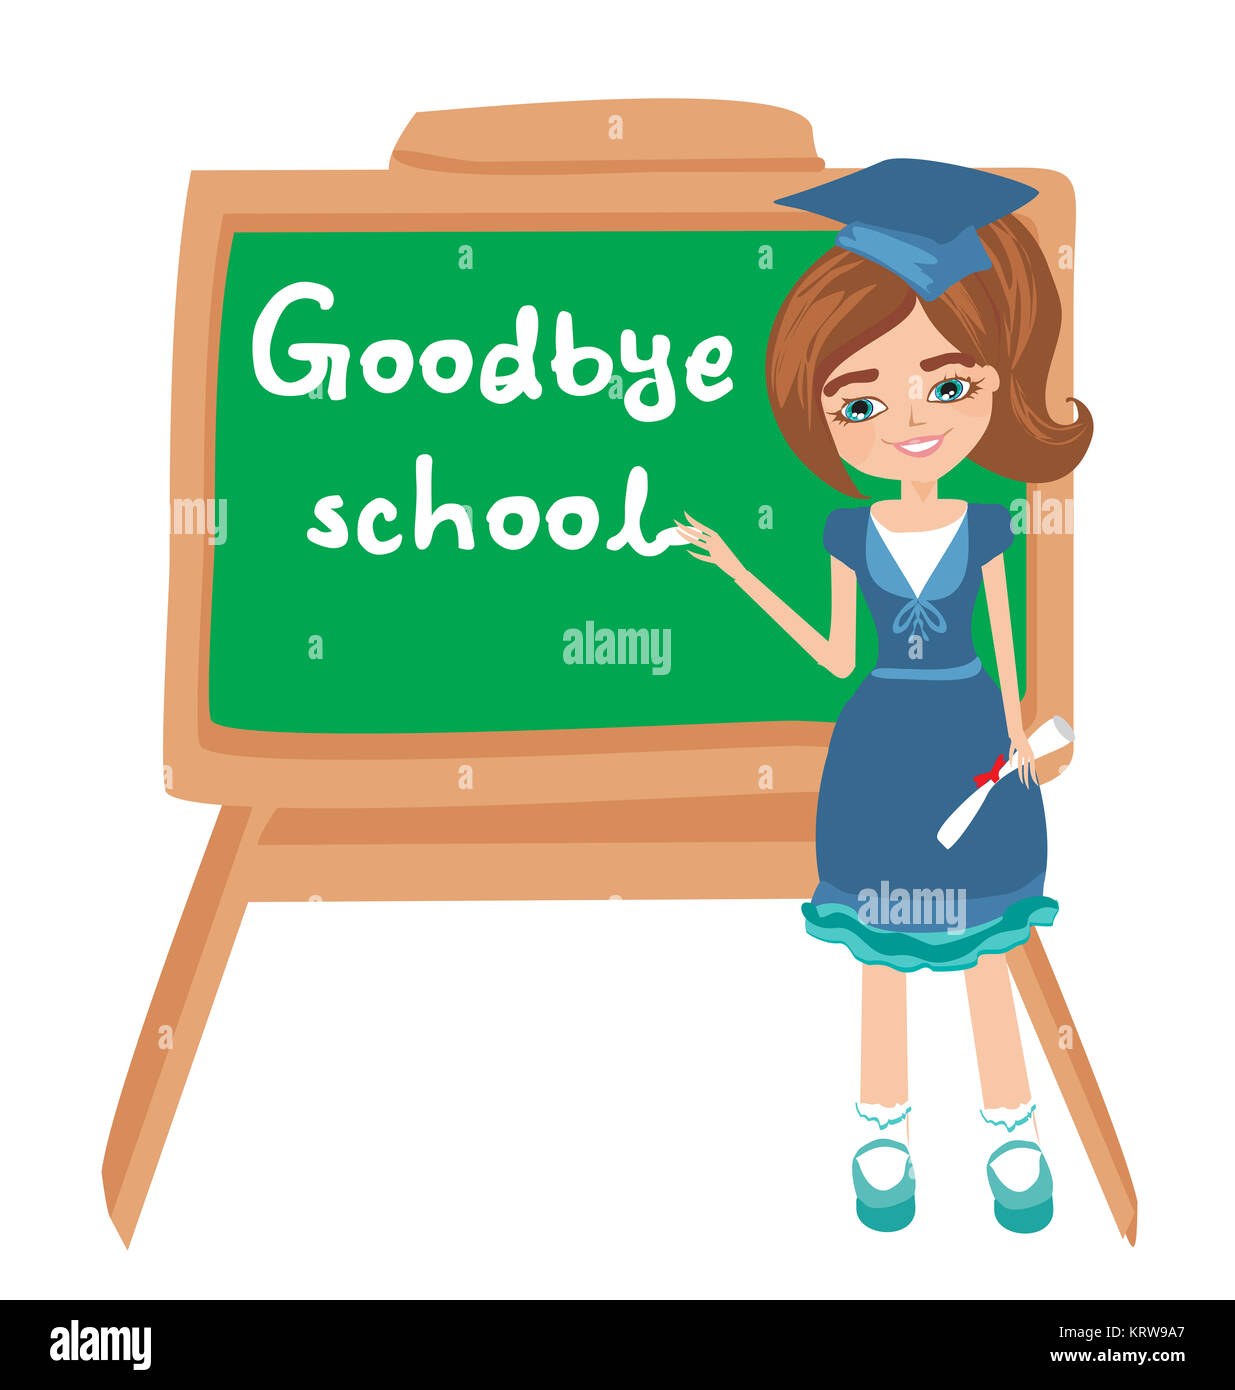 goodbye school Stock Photo